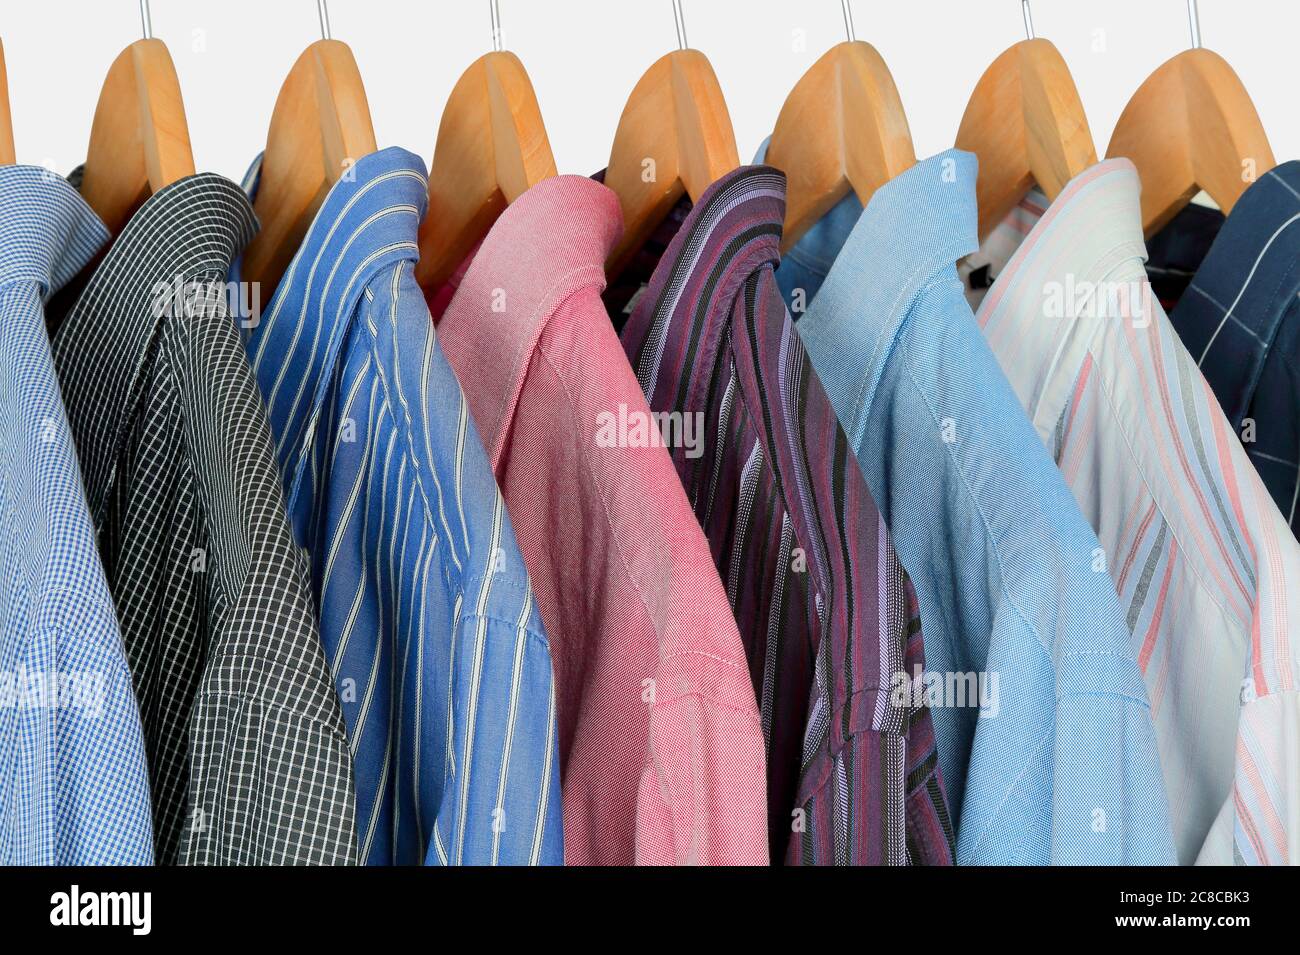 https://c8.alamy.com/comp/2C8CBK3/variety-of-shirts-on-hangers-2C8CBK3.jpg